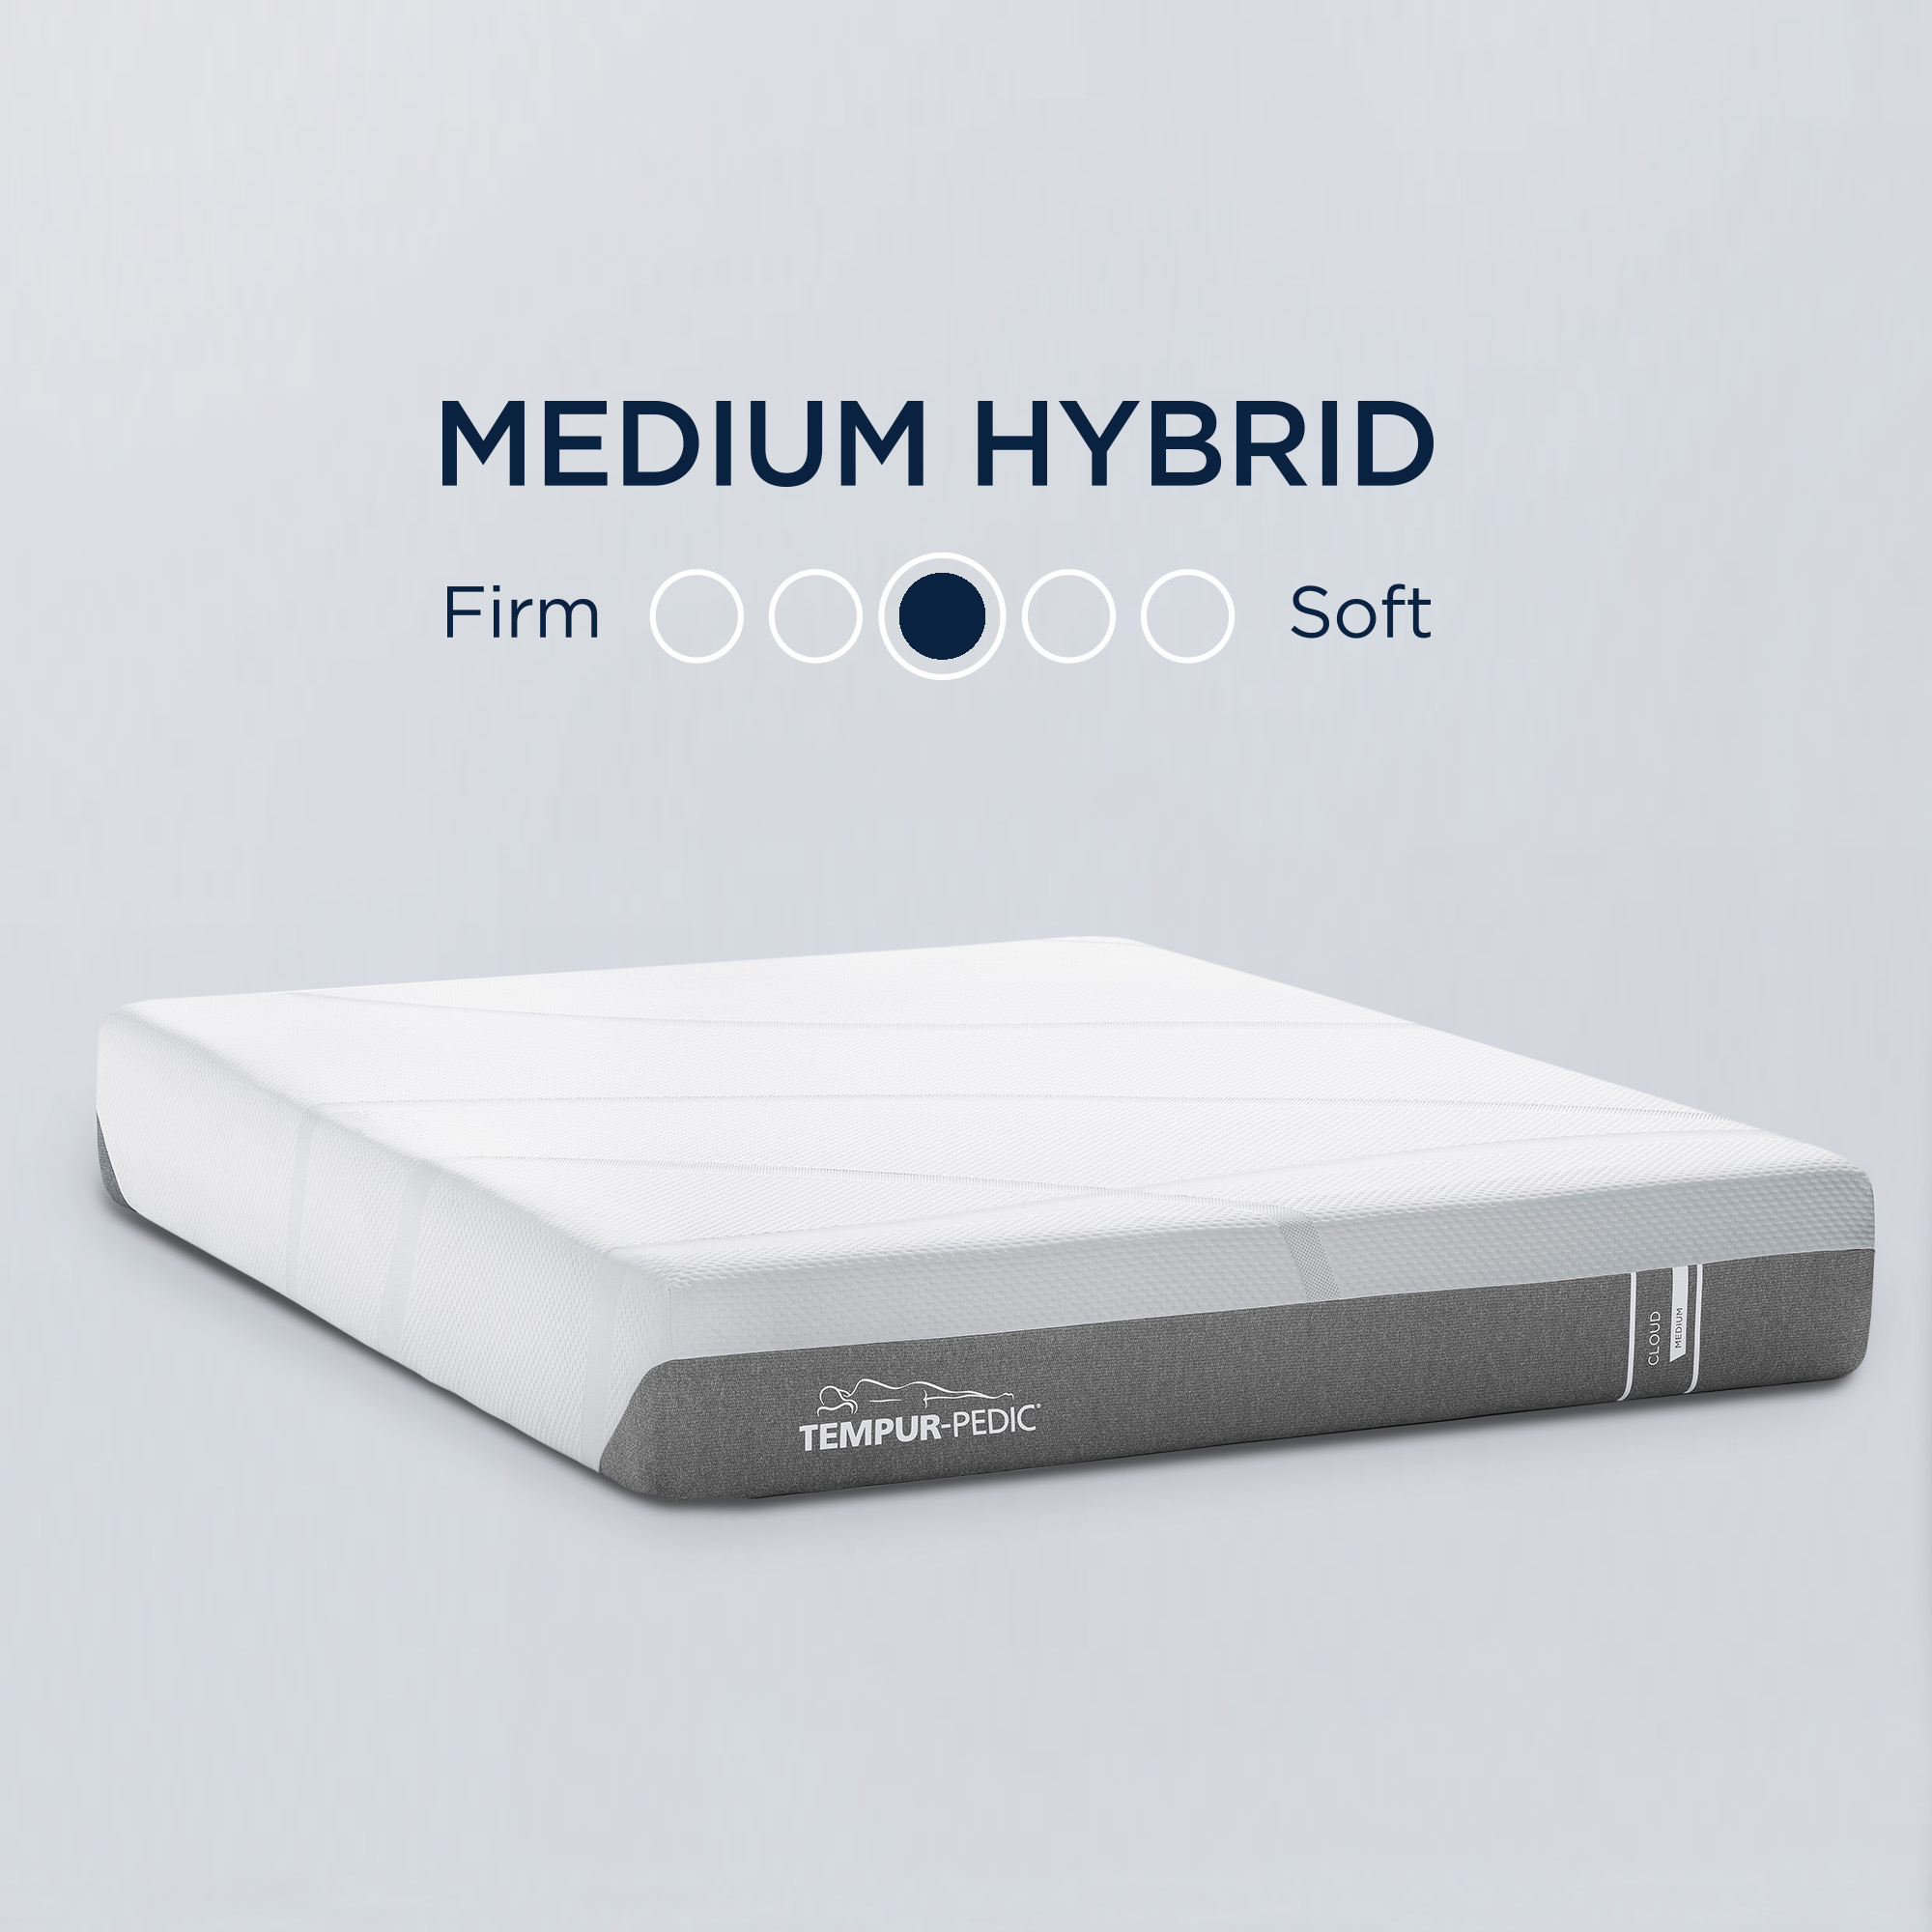 Tempur-Pedic Cloud Medium Hybrid Memory Foam Bed in a Box, King Size - image 4 of 6